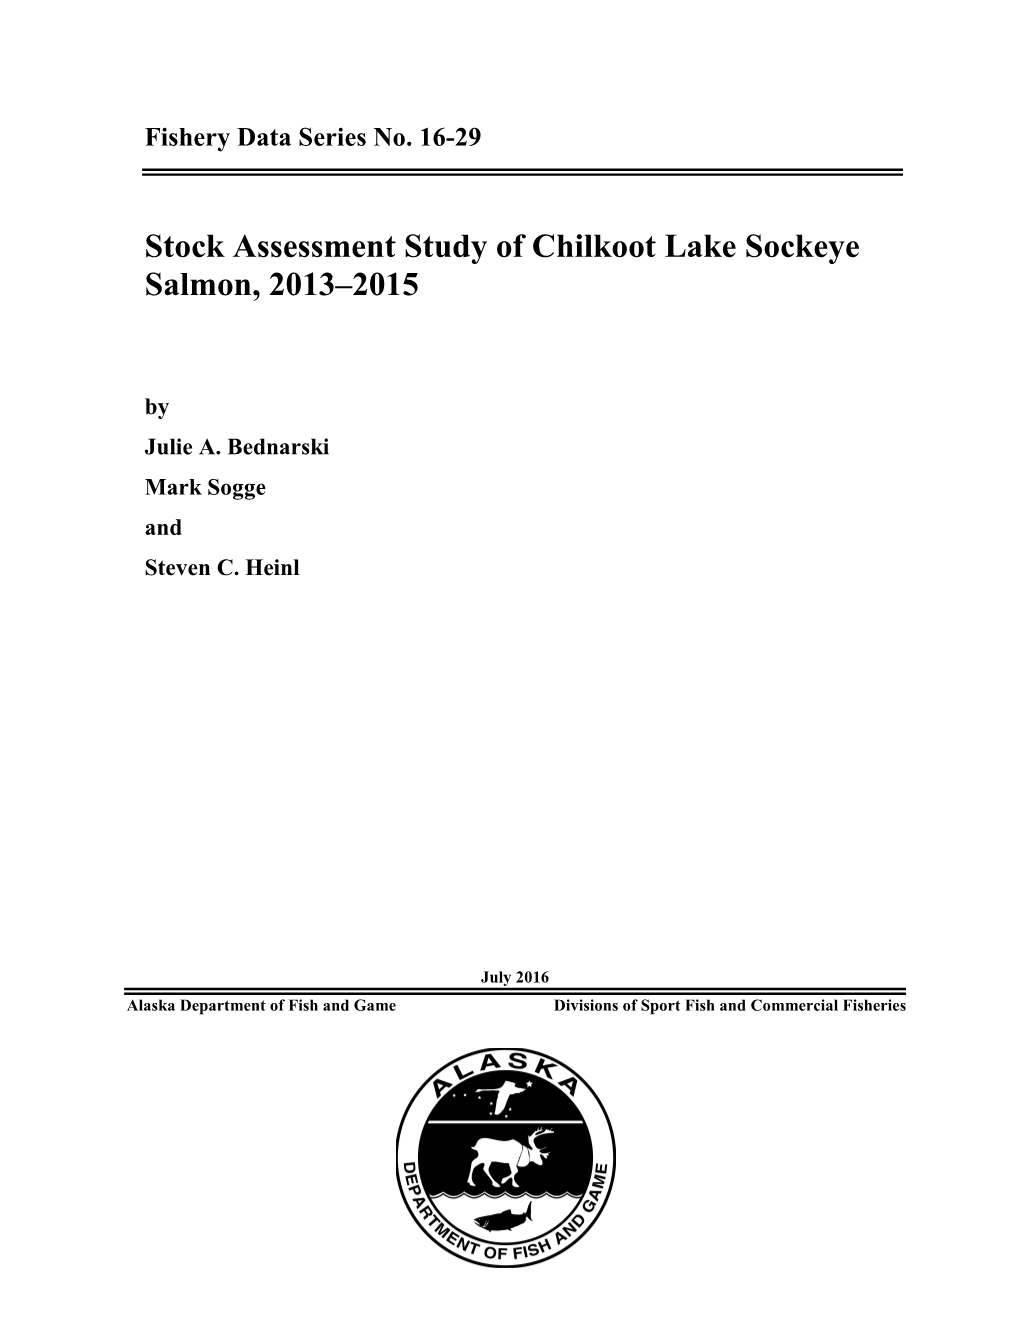 Stock Assessment Study of Chilkoot Lake Sockeye Salmon, 2013-2015